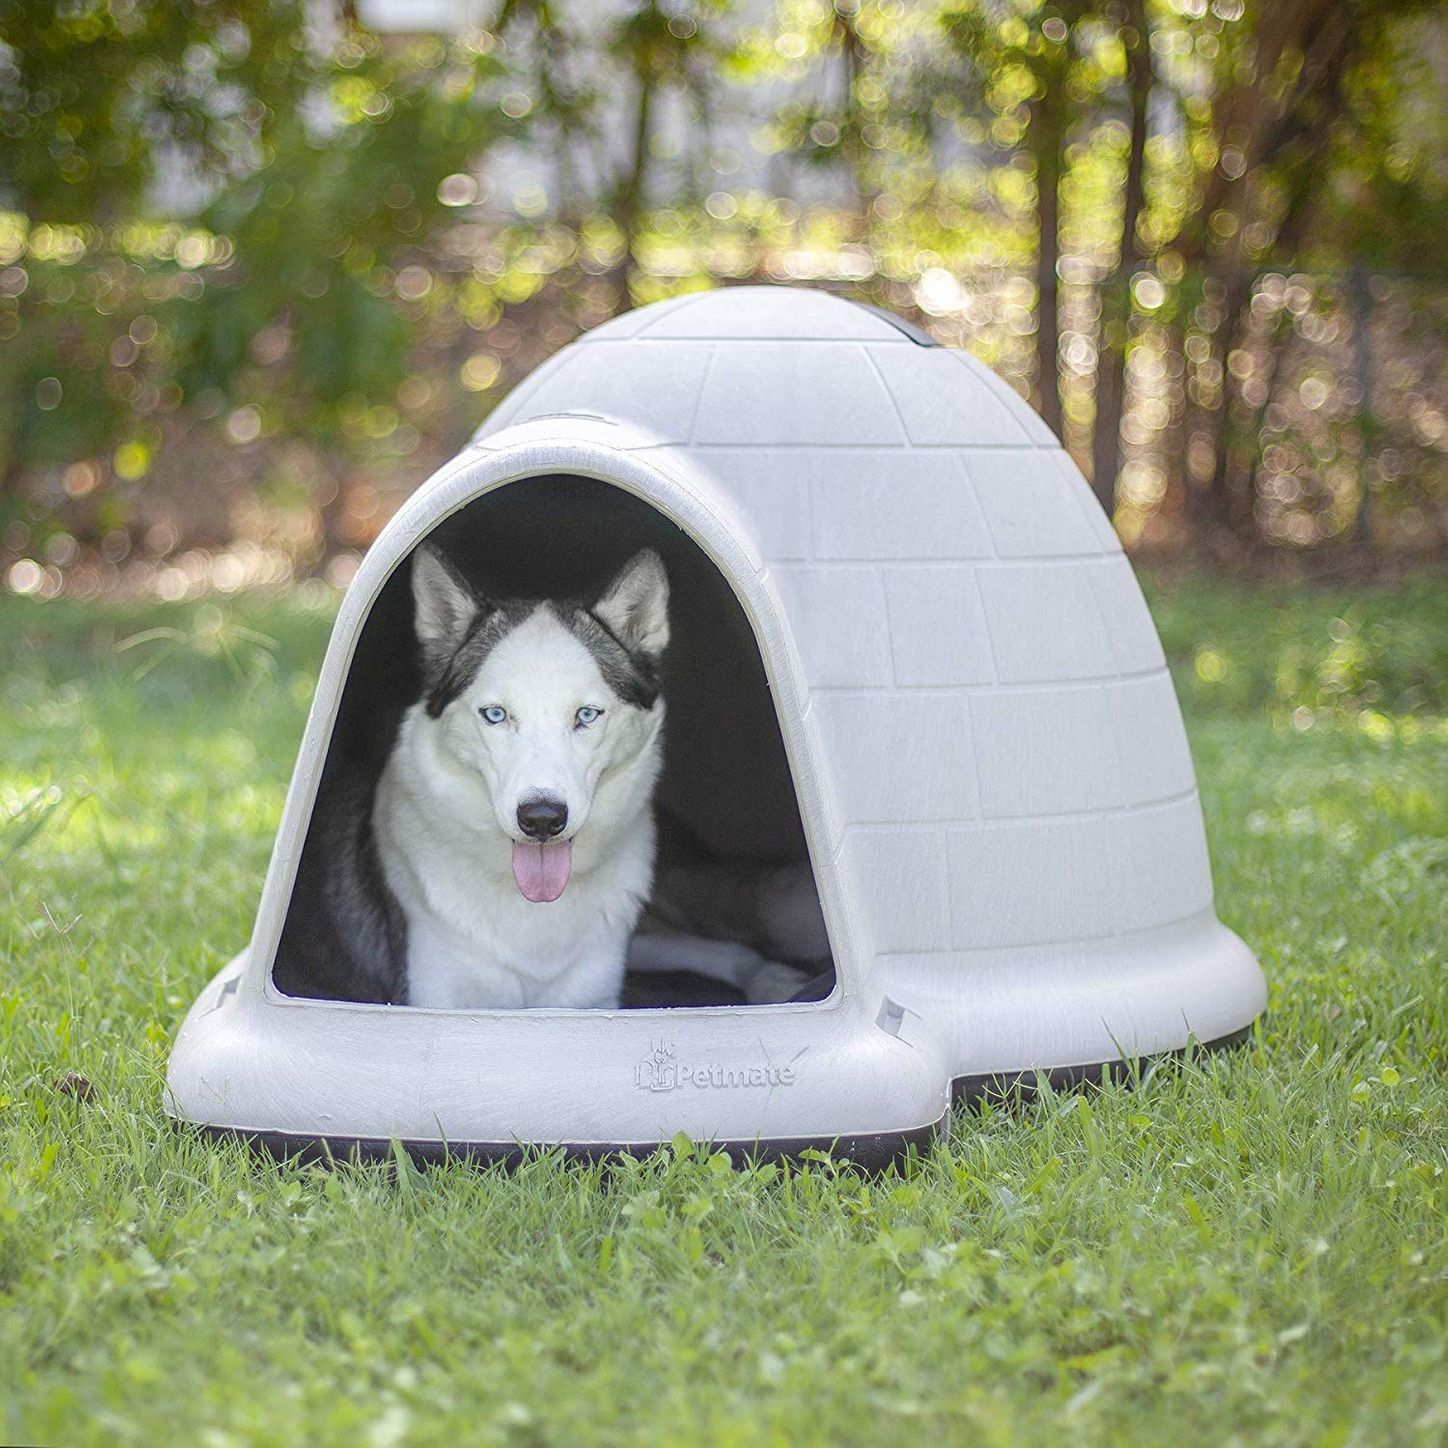 warmest dog houses